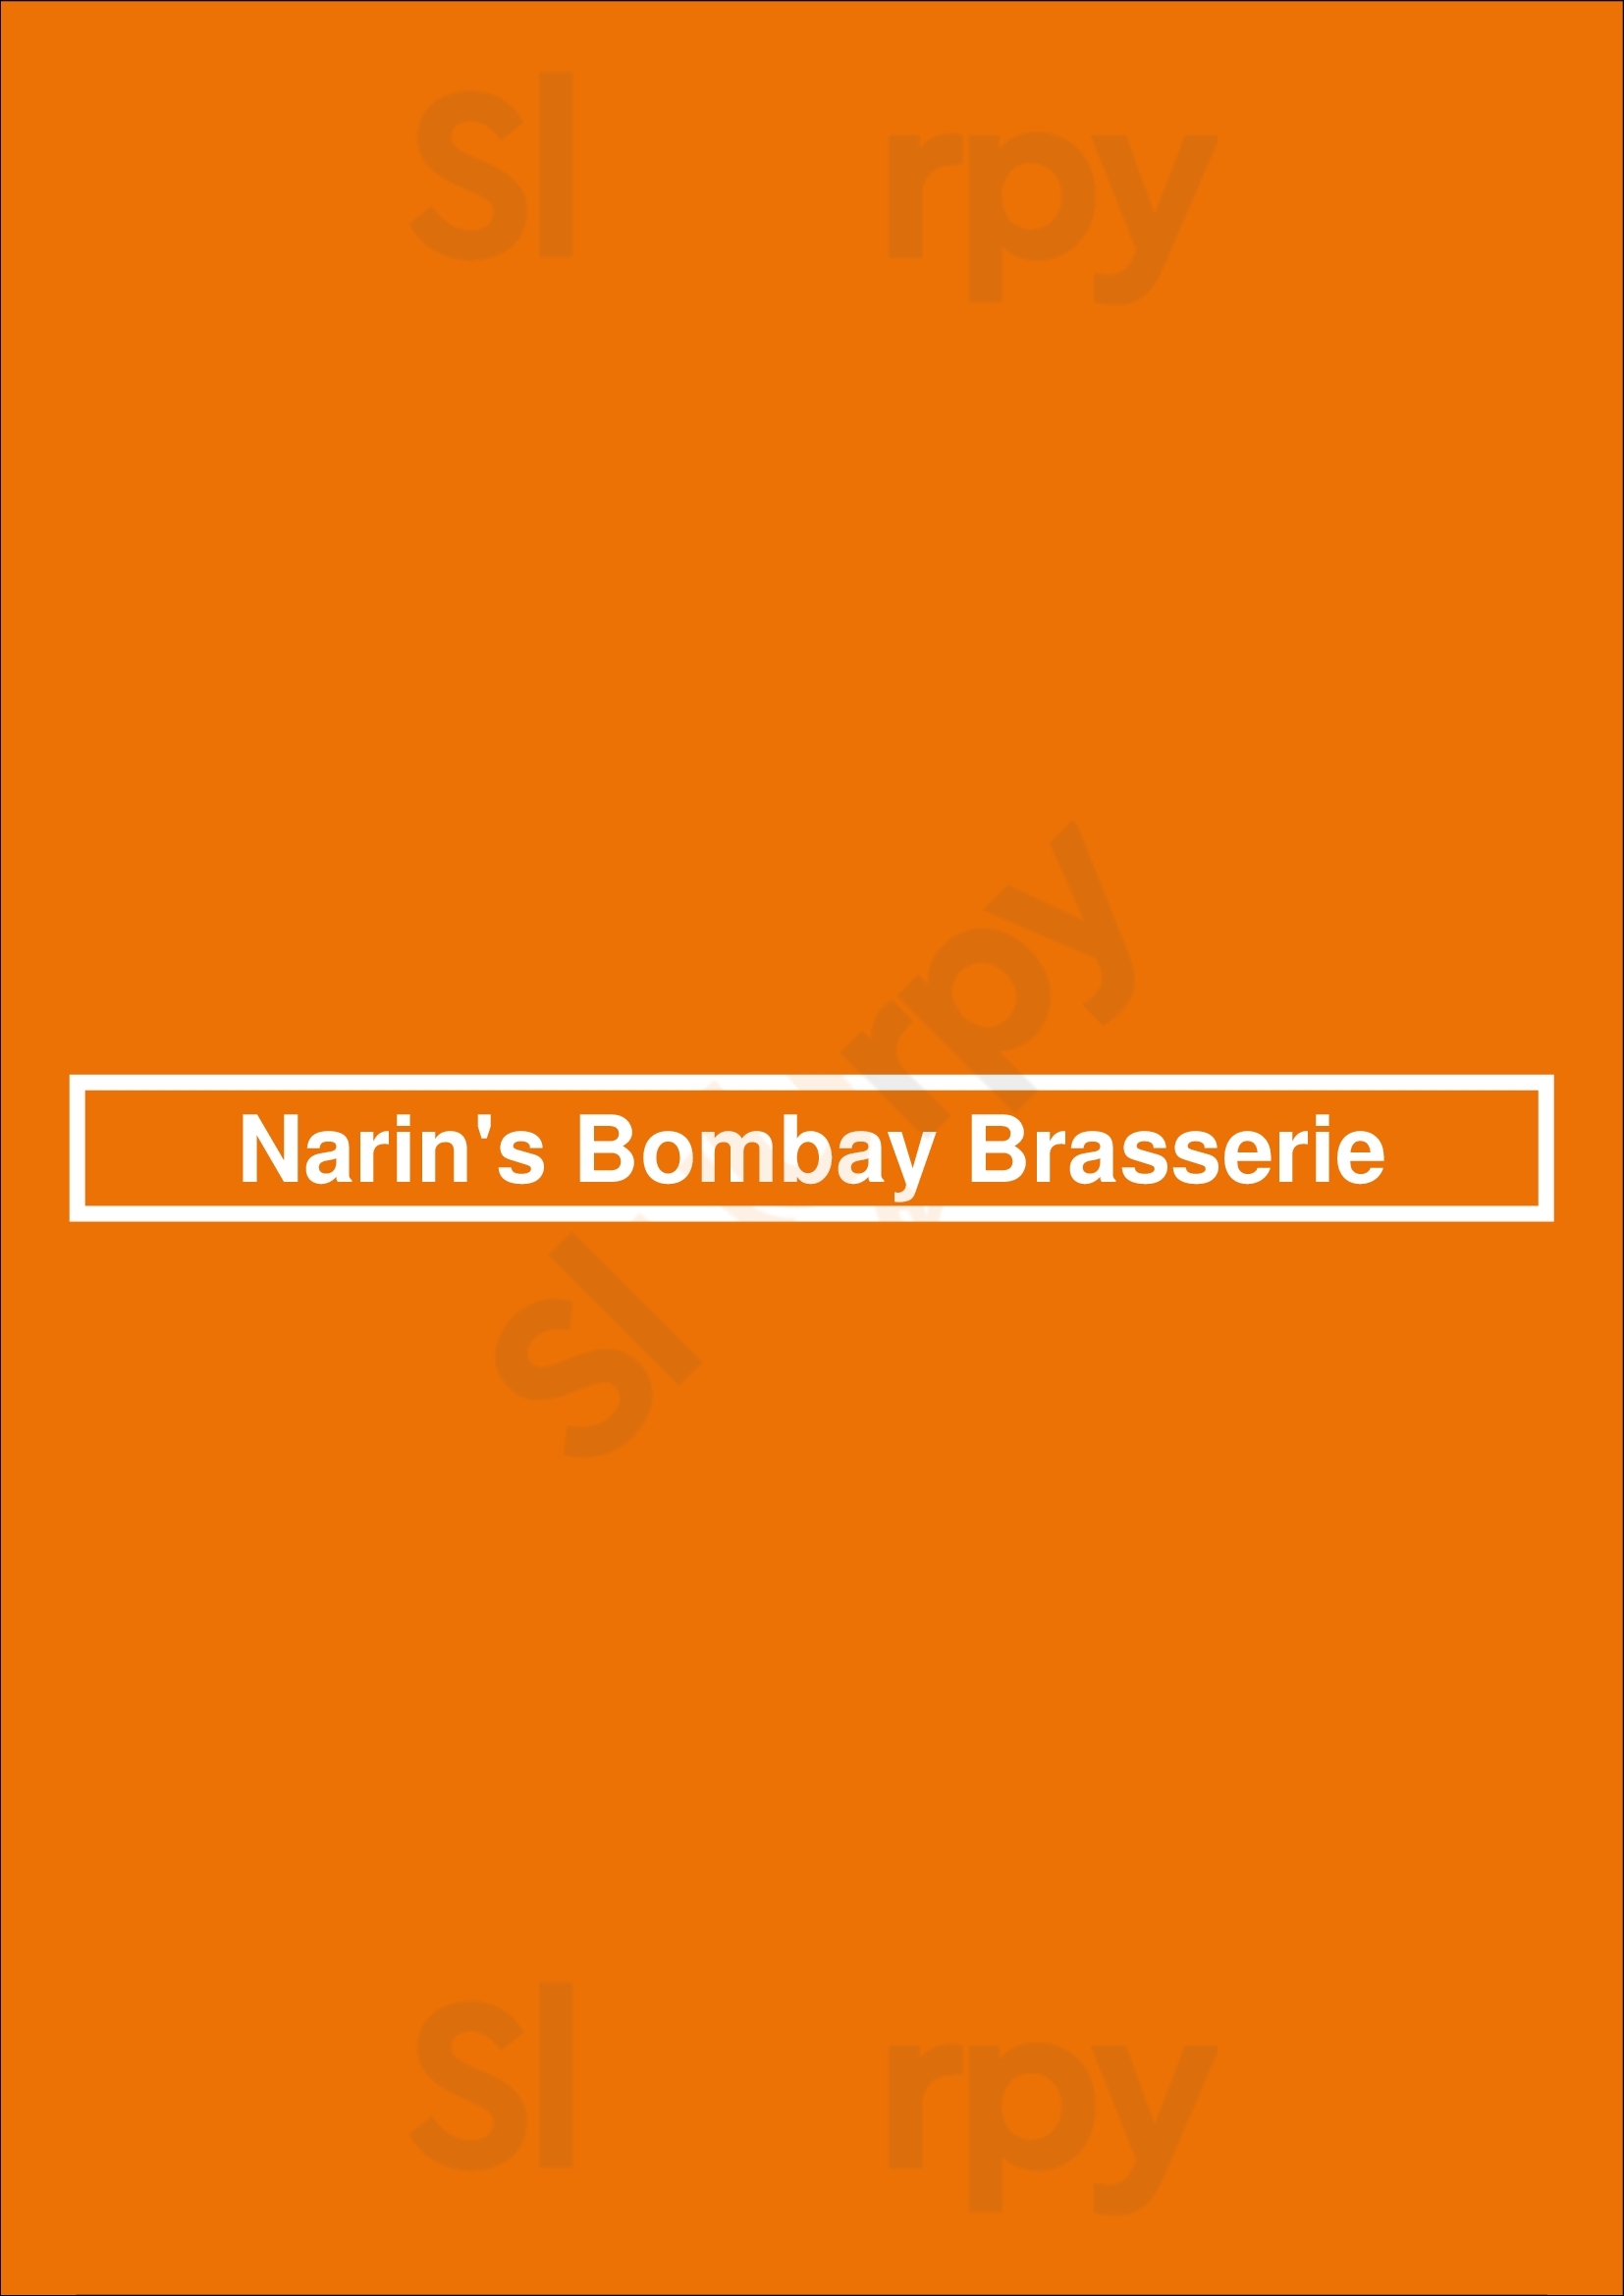 Narin's Bombay Brasserie Houston Menu - 1